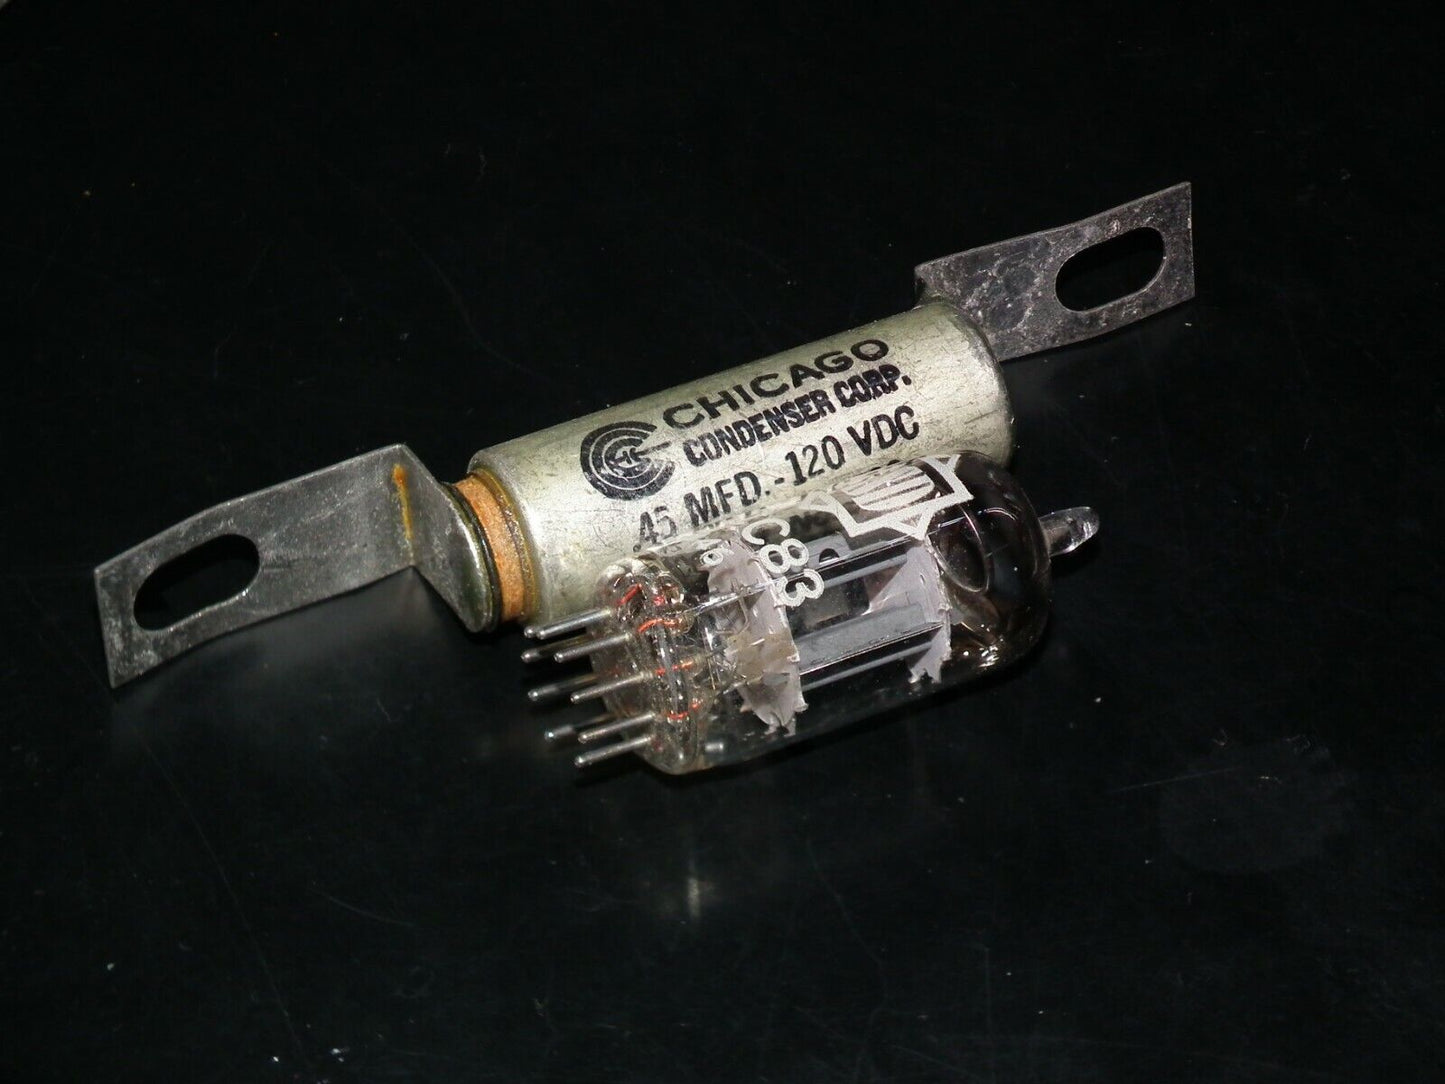 One vintage PIO capacitor 0.45uF 120V NOS Chicago Condenser Corp 0.45mfd #503